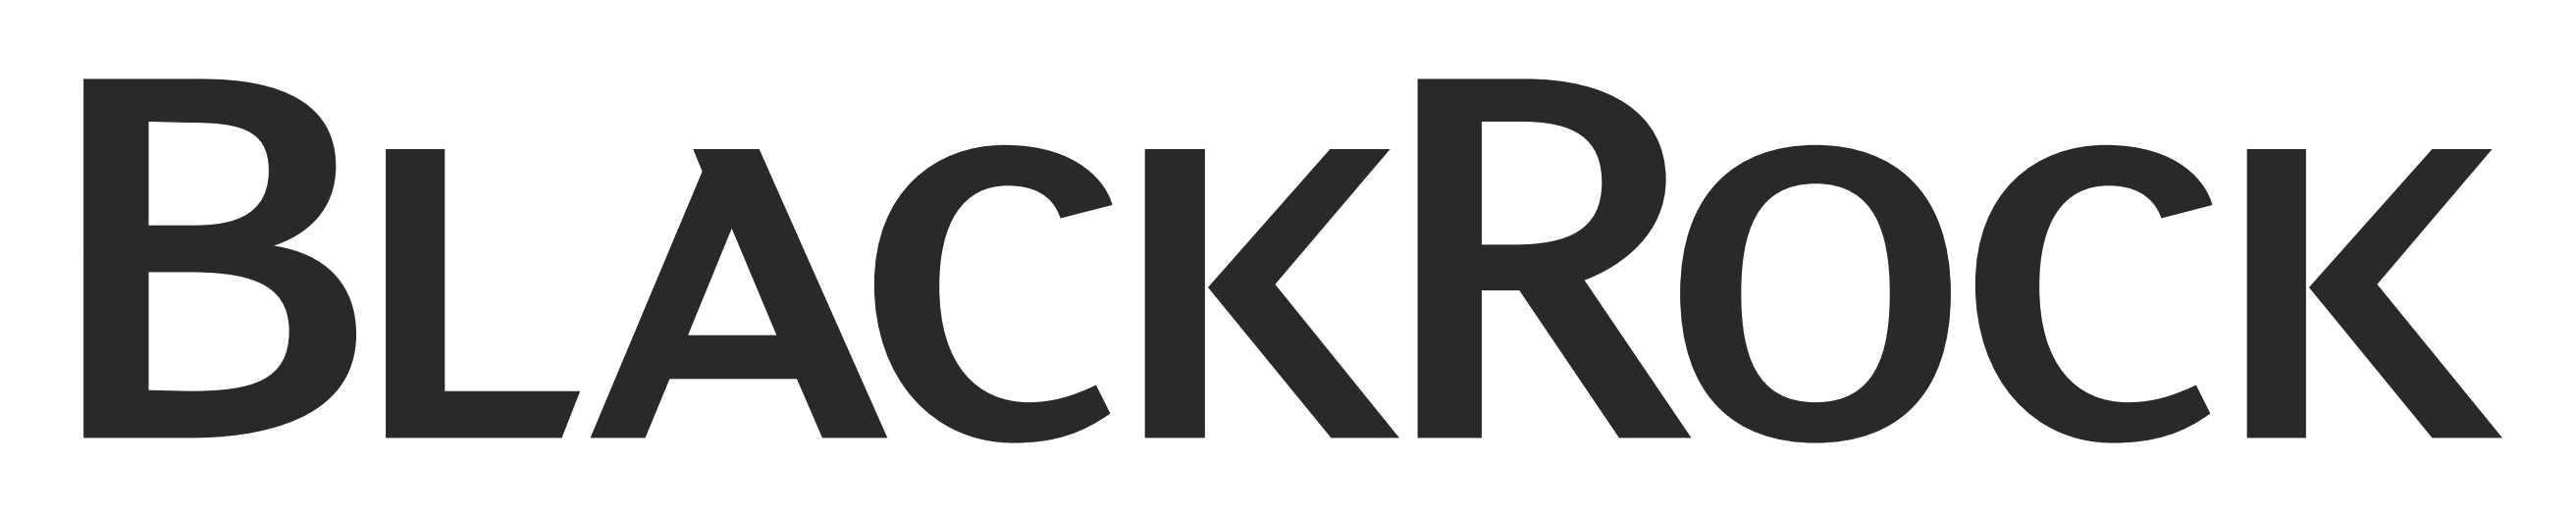 BlackRock Logo photo - 1